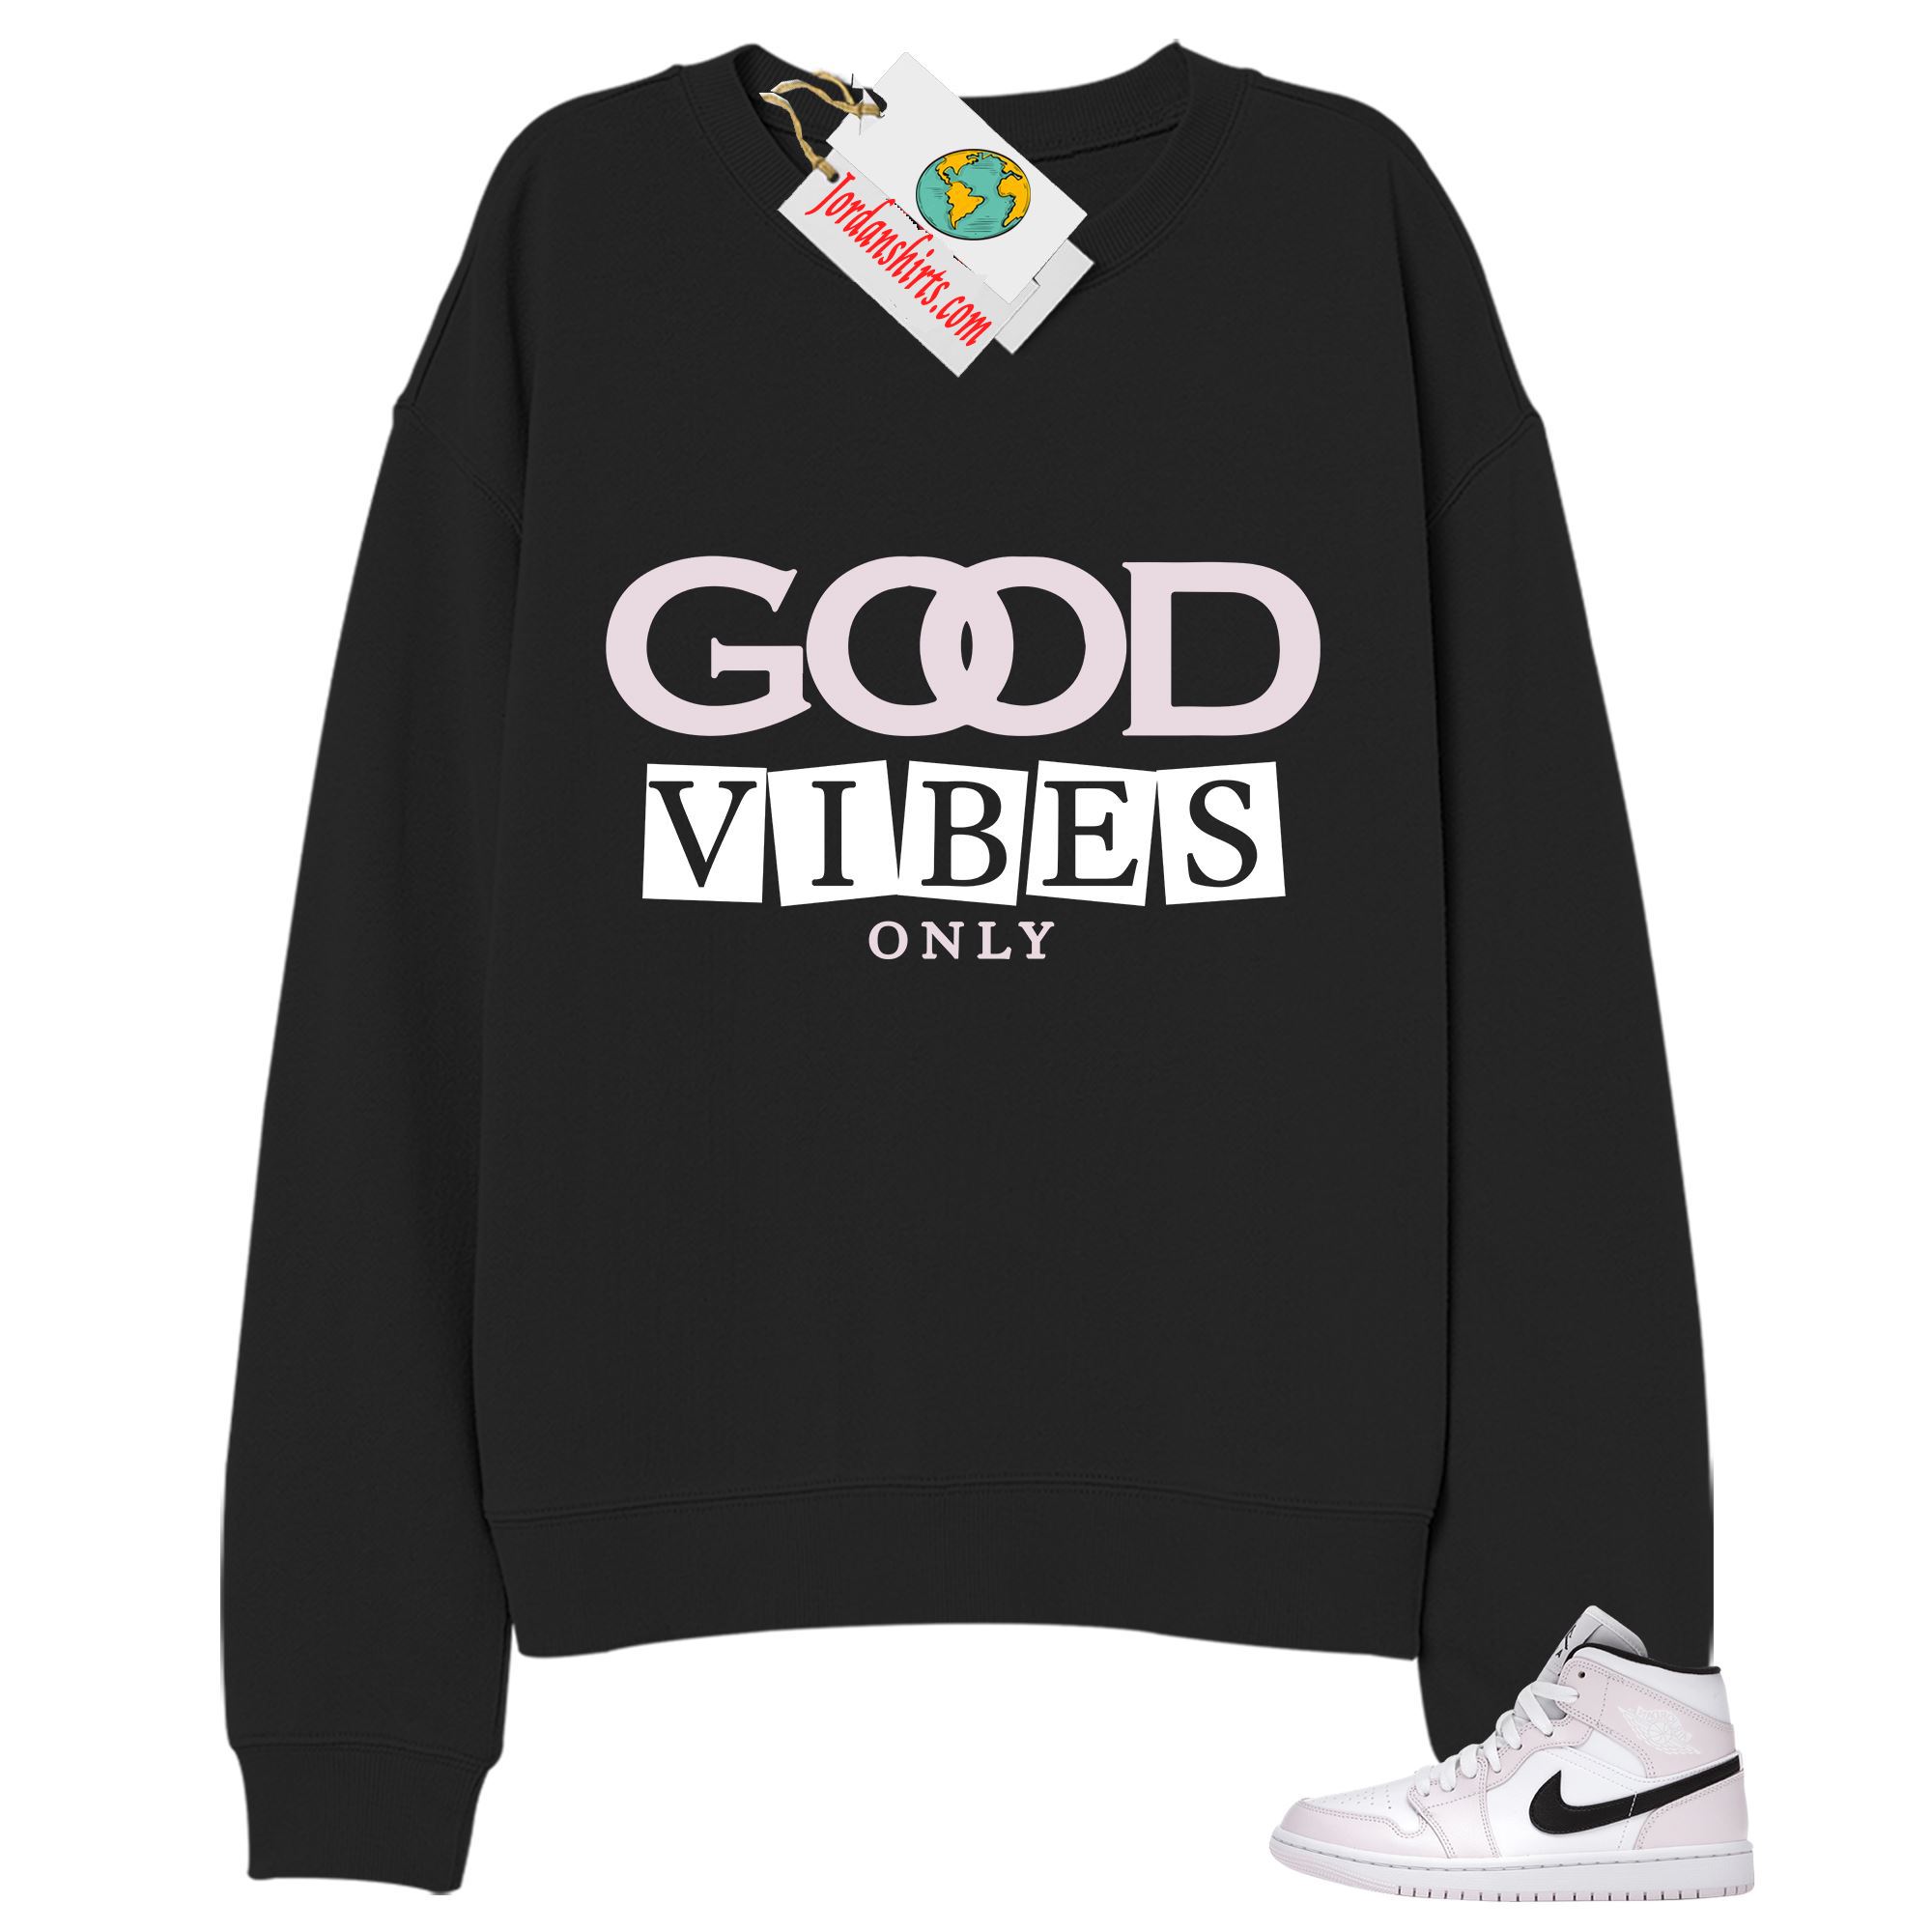 Jordan 1 Sweatshirt, Good Vibes Only Black Sweatshirt Air Jordan 1 Barely Rose 1s Size Up To 5xl